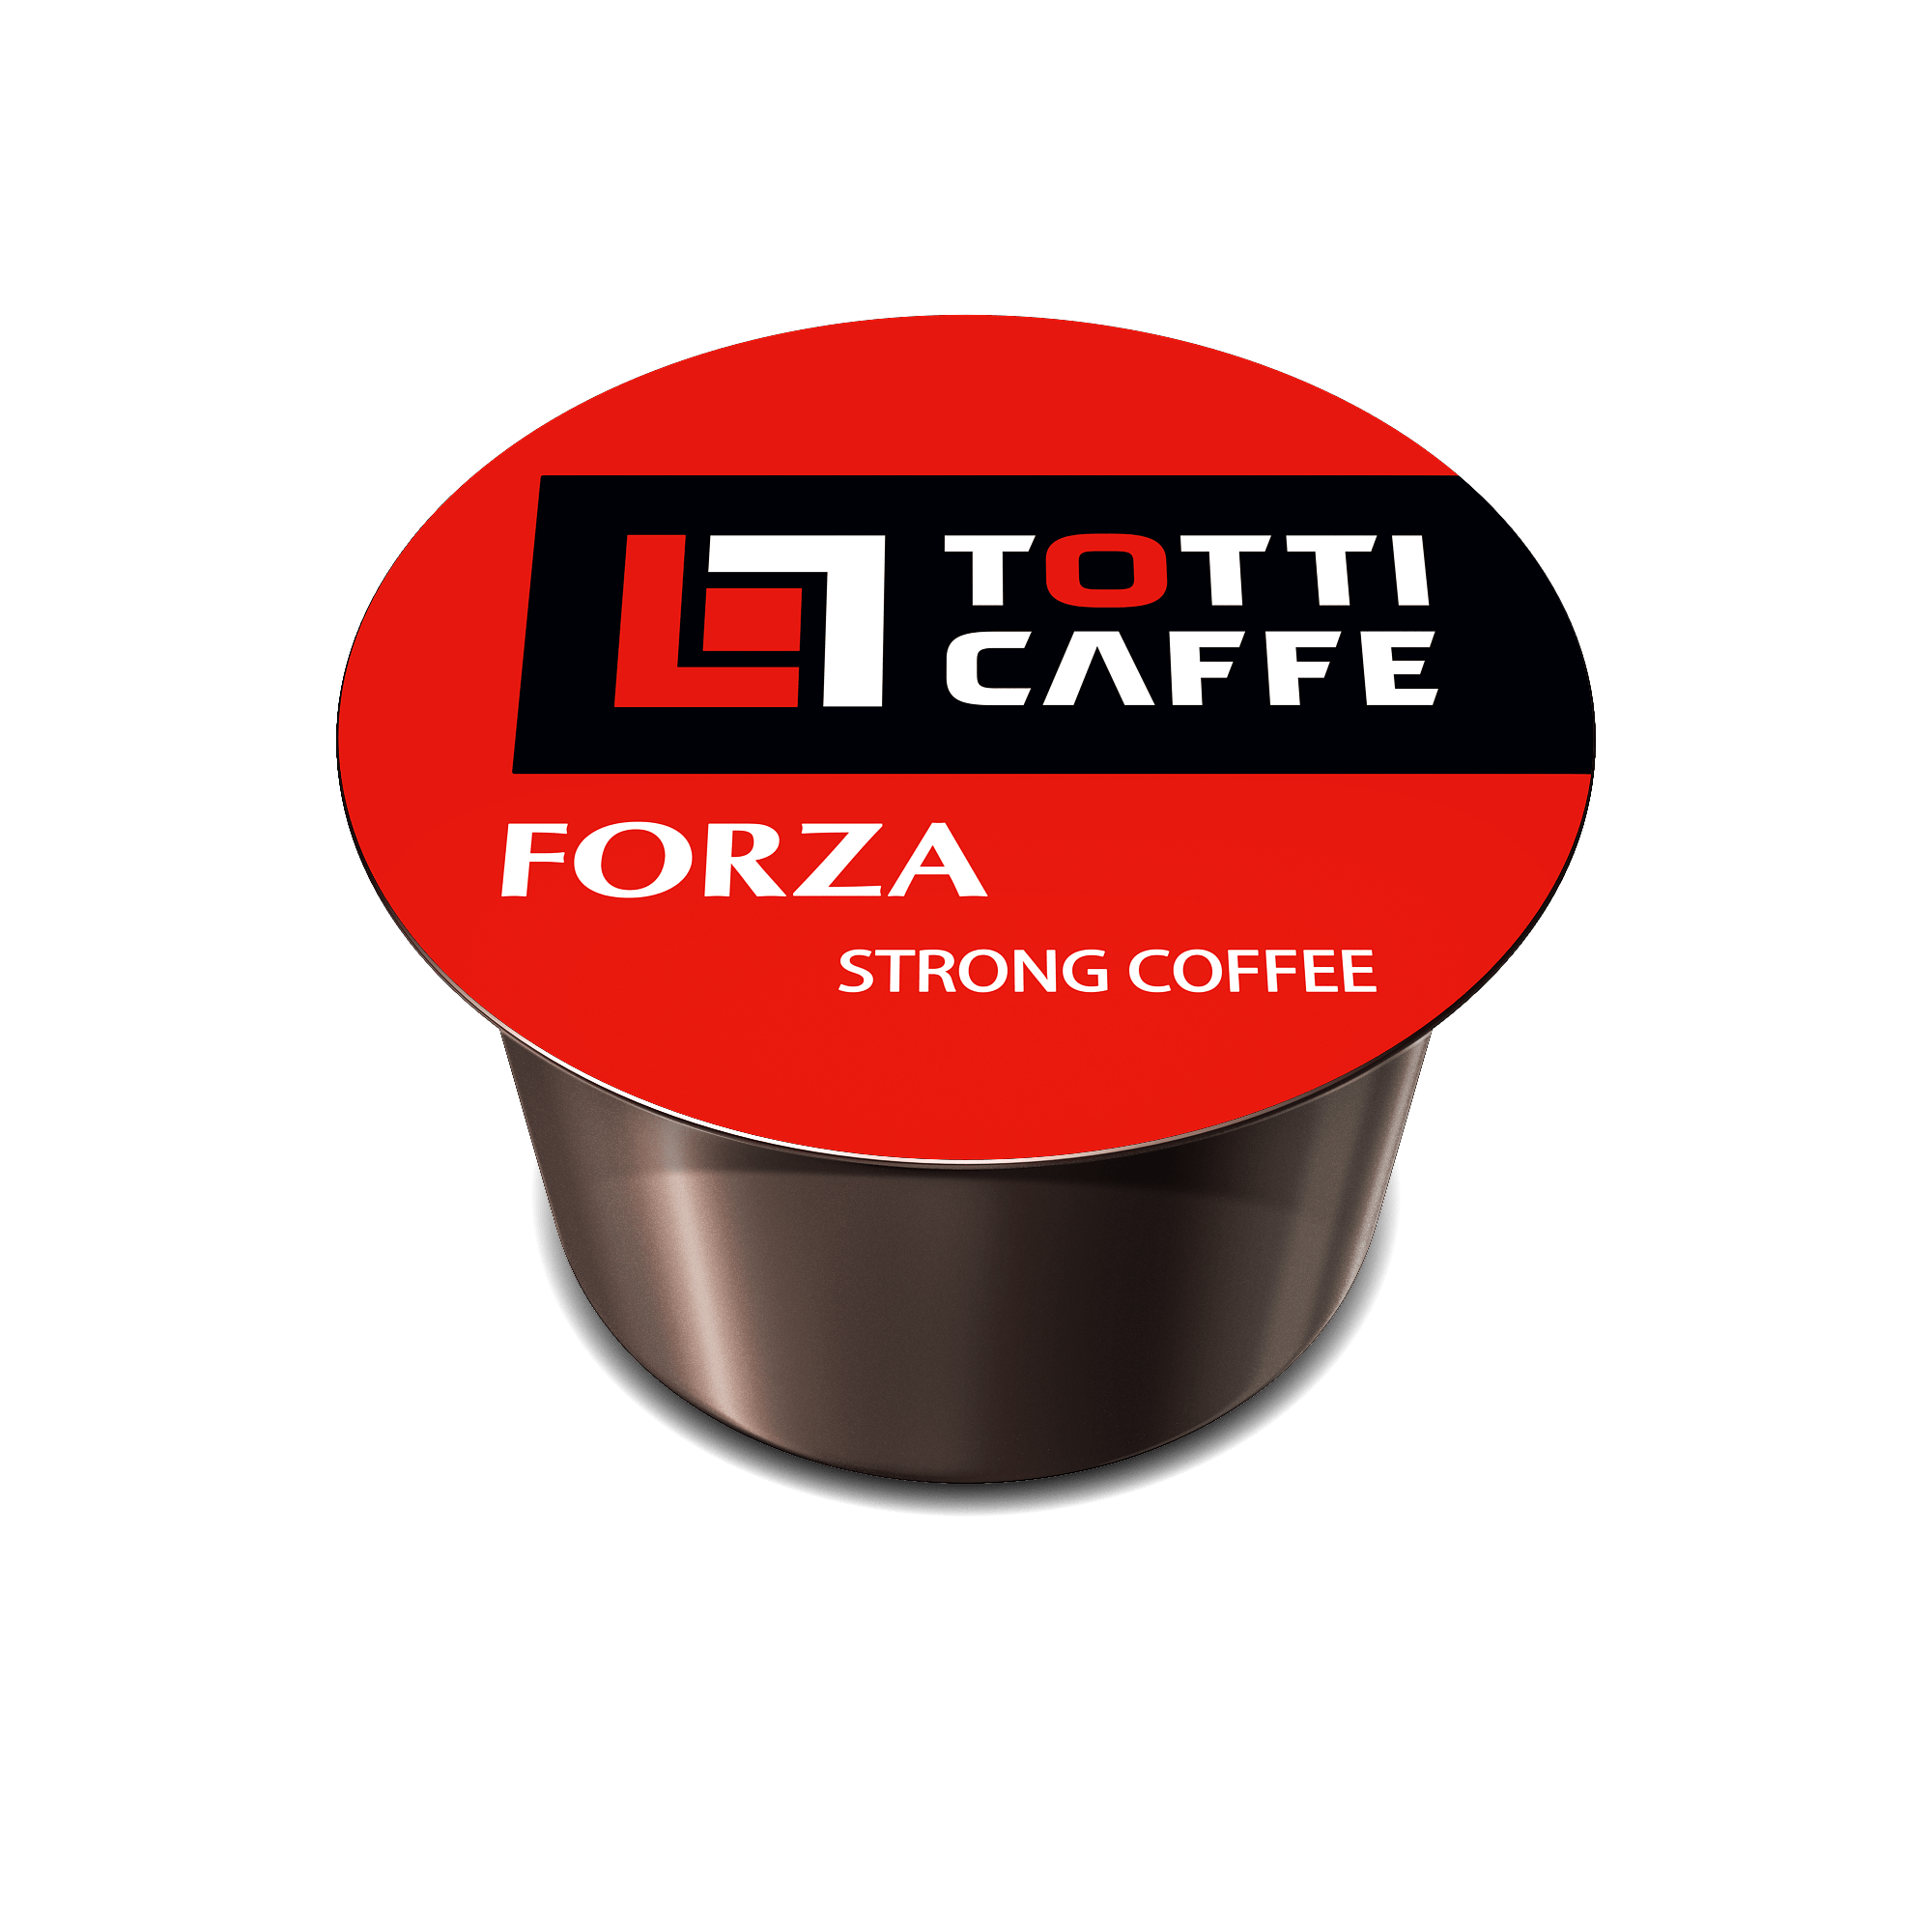 Totti Forza – интернет-магазин coffice.ua